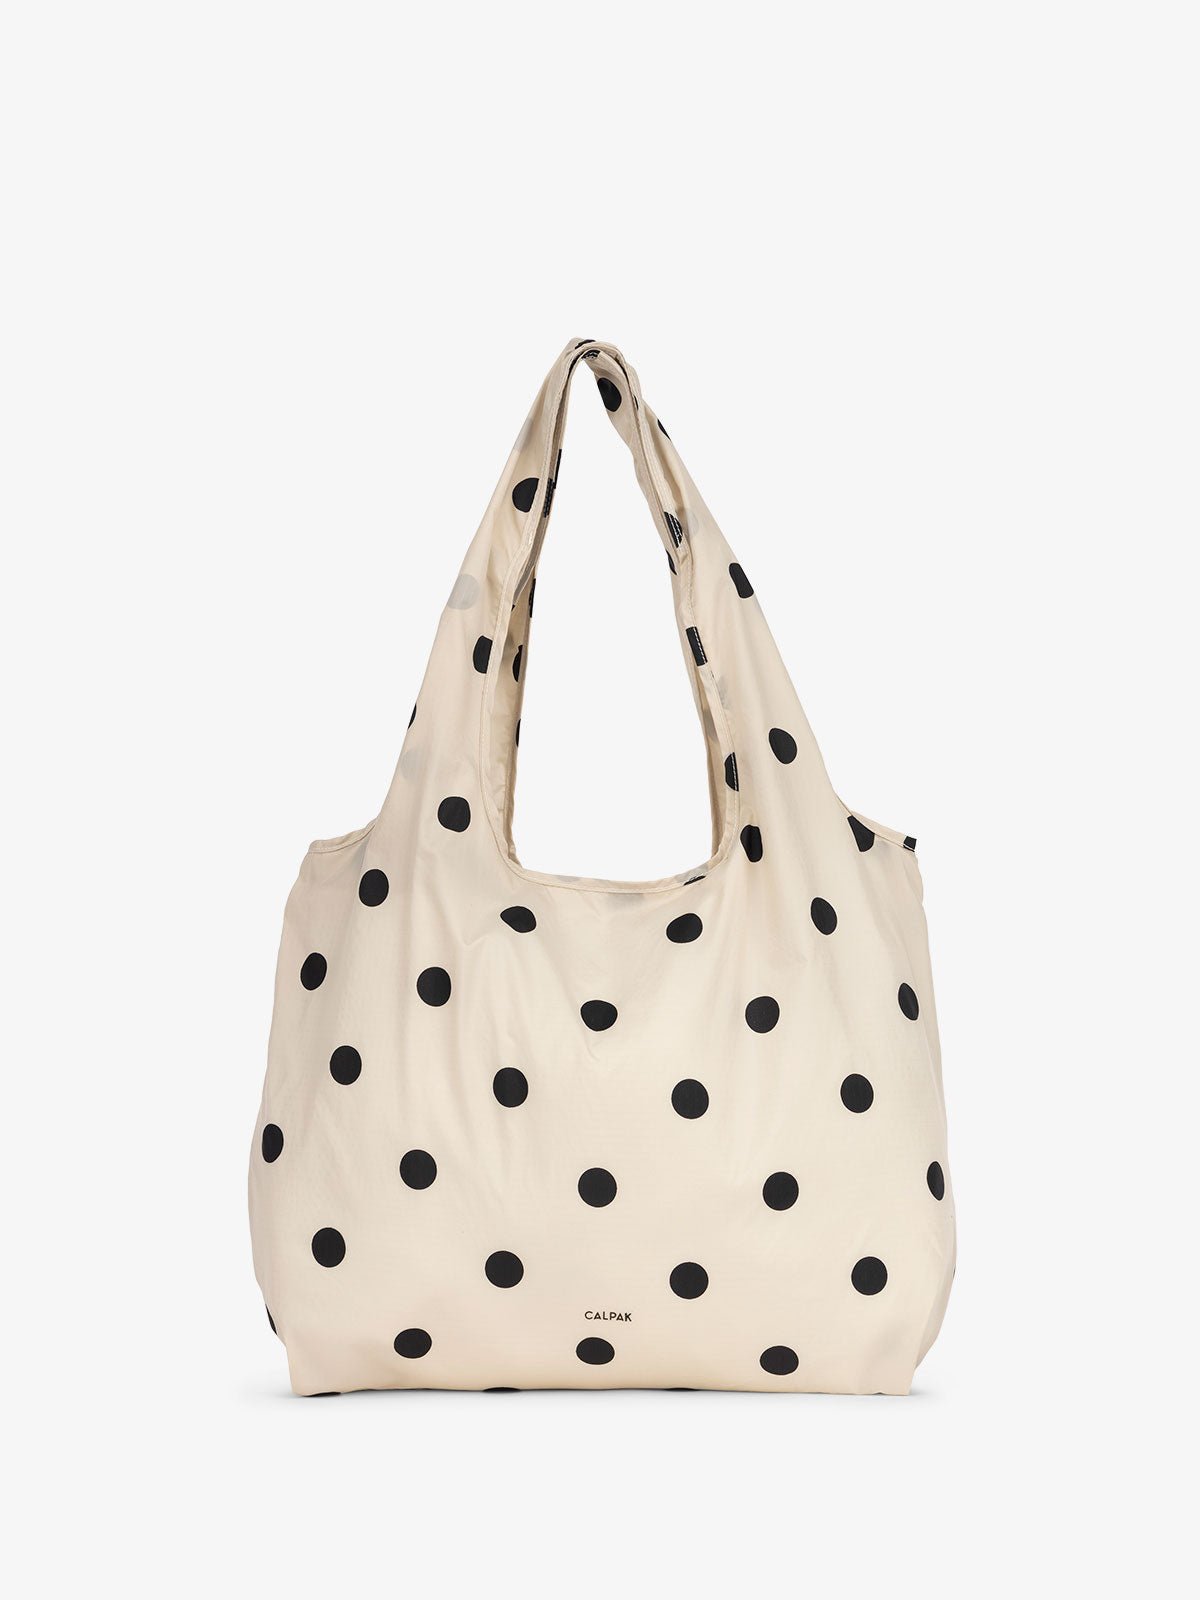 Nylon foldable tote bag for grocery shopping in polka dot print